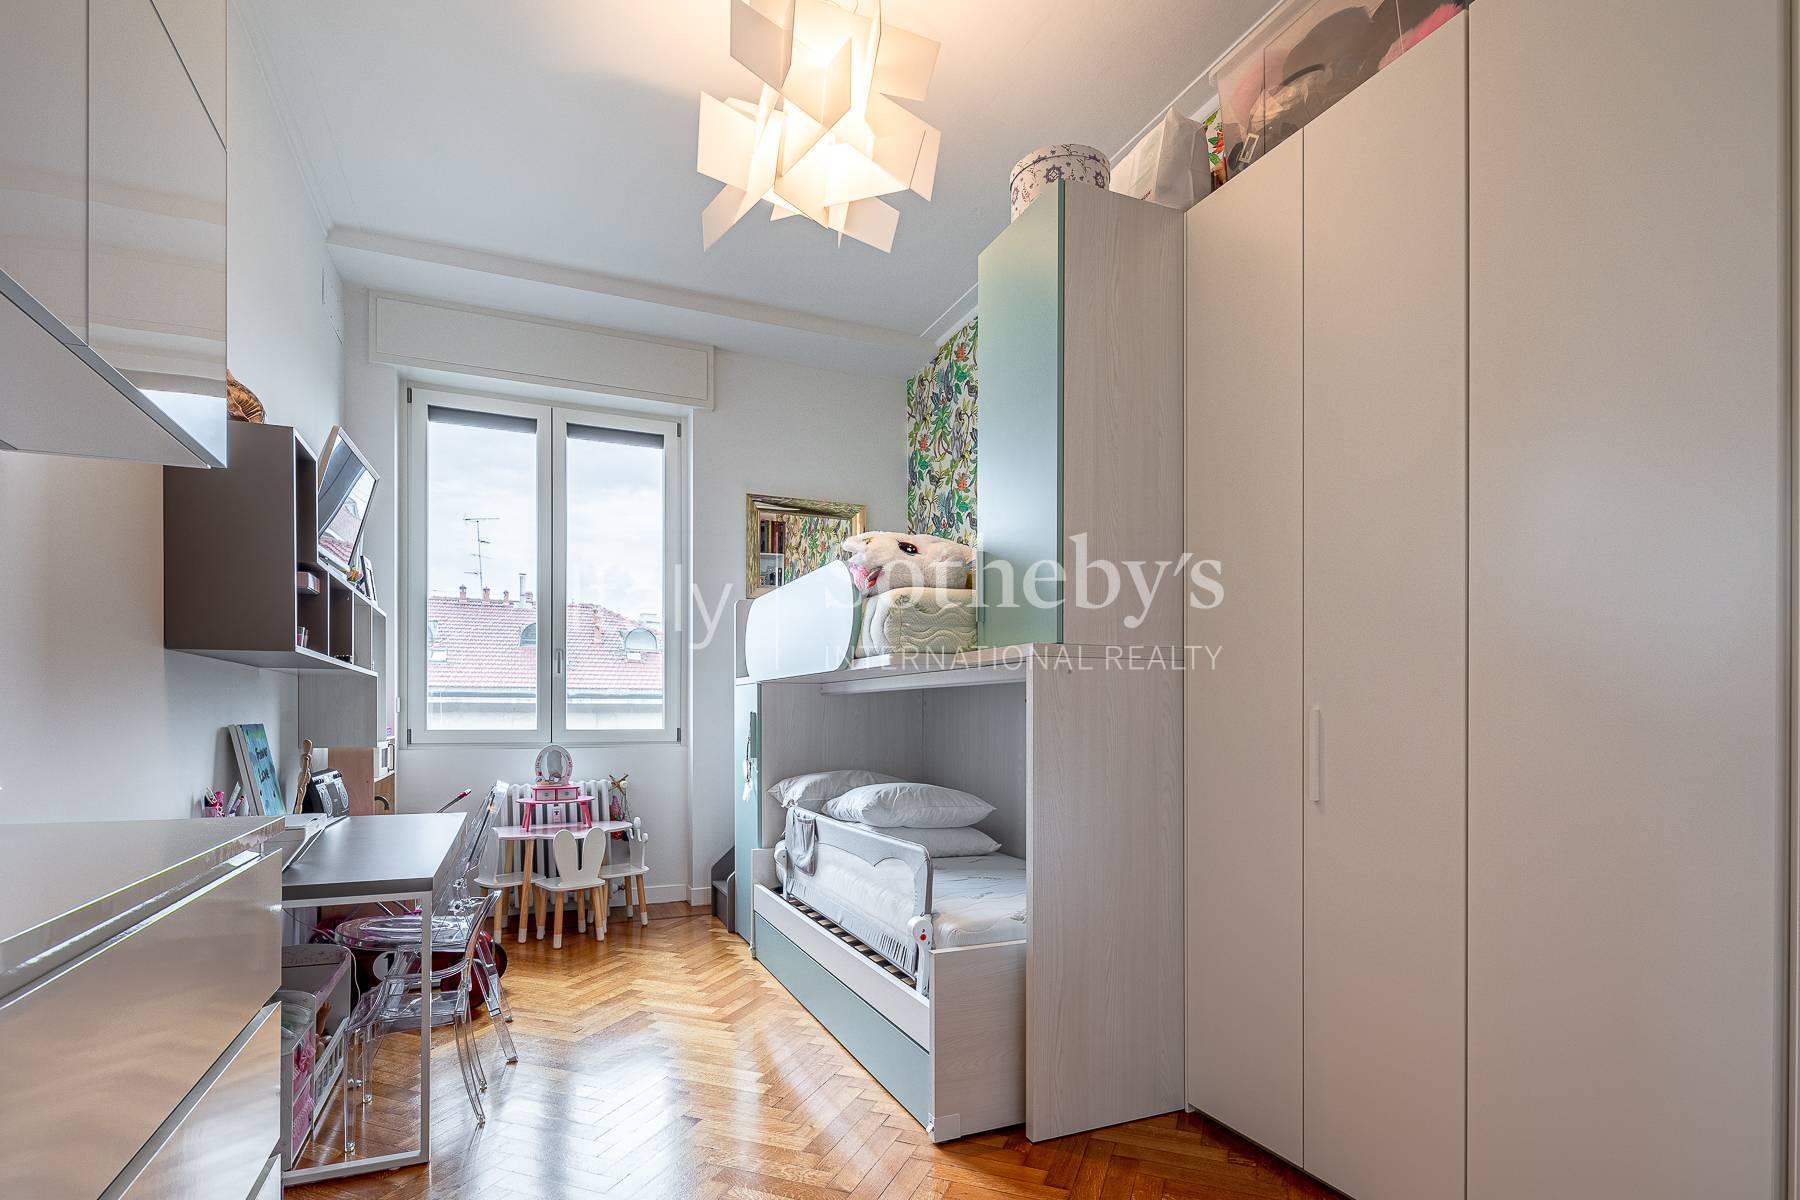 Superb furnished apartment in the Bianca di Savoia / Quadronno area - 14